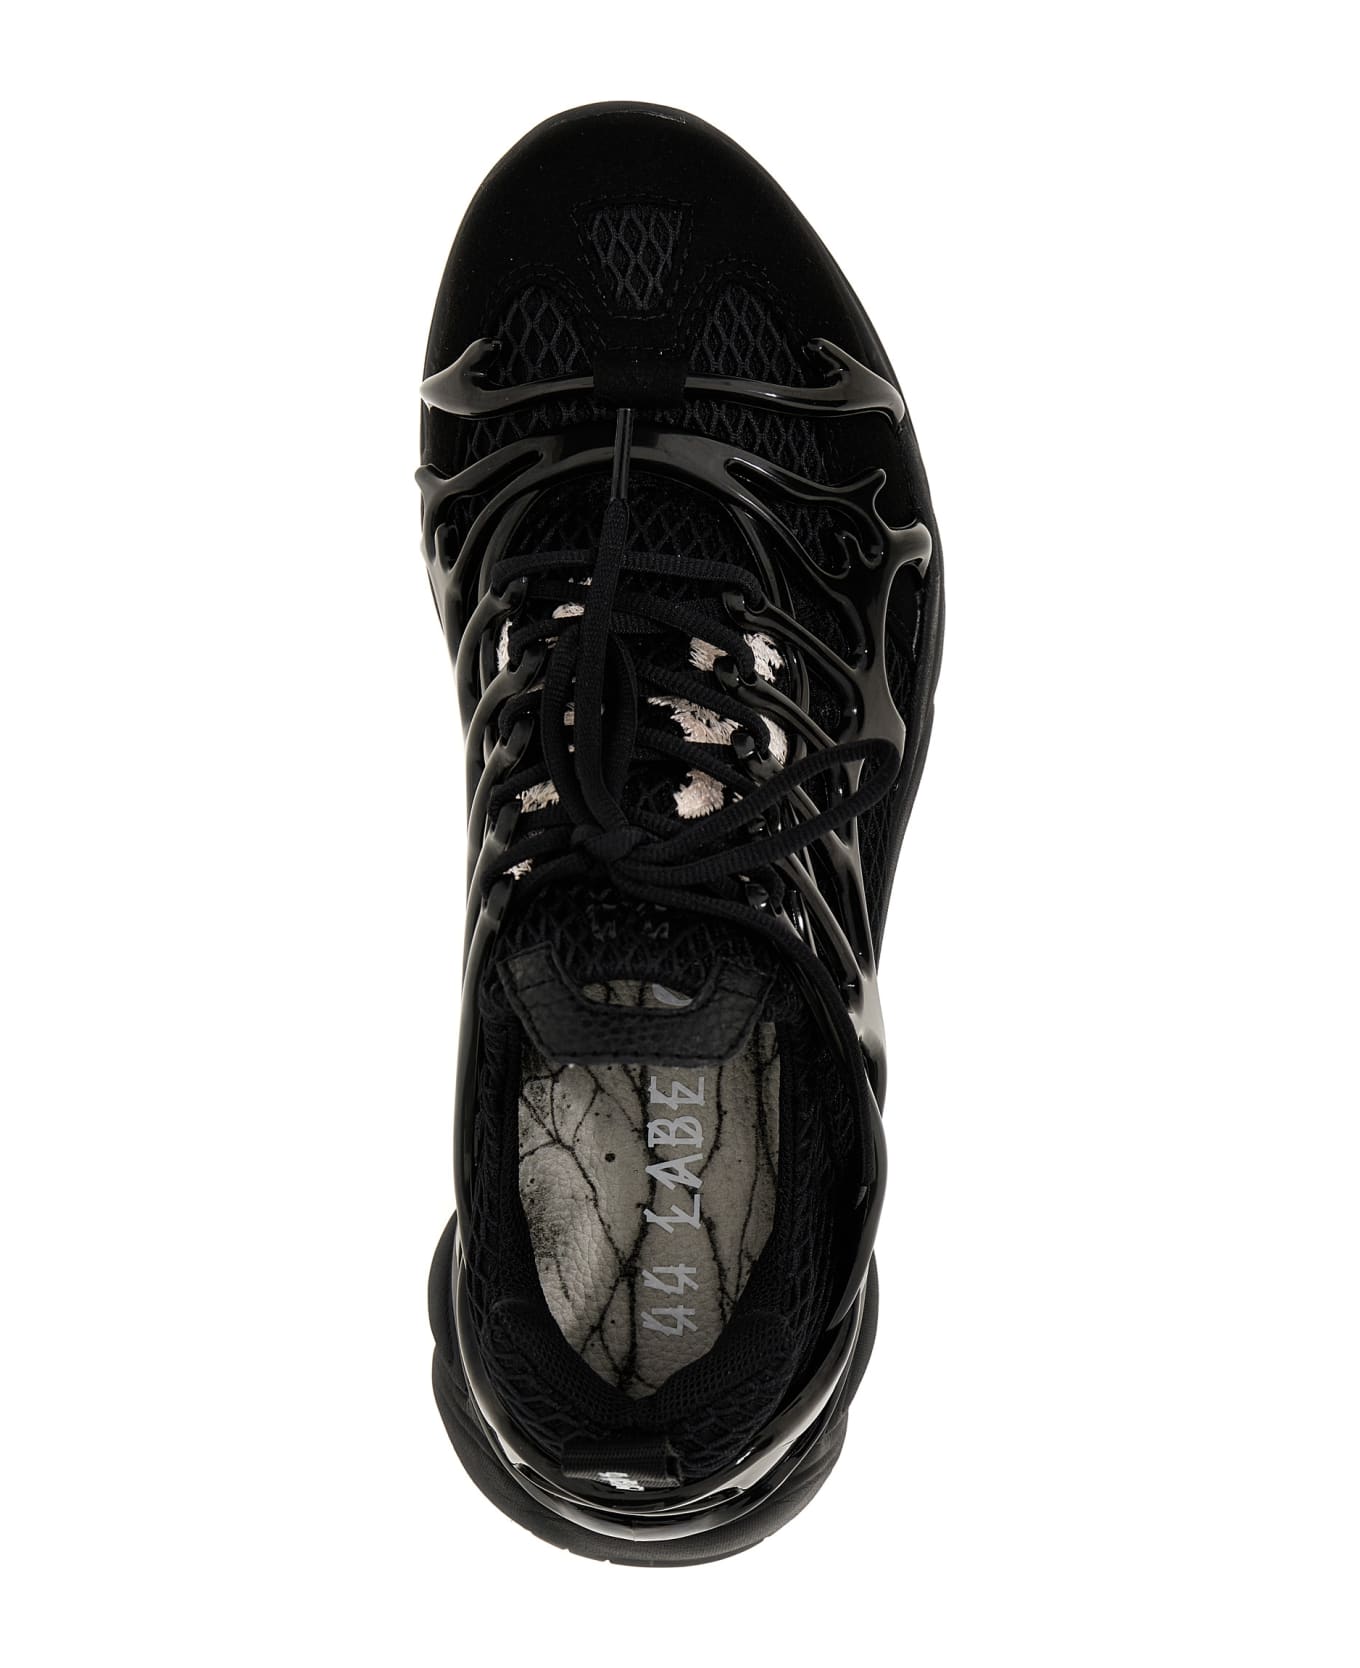 44 Label Group Tech Nylon Sneakers - Black   スニーカー